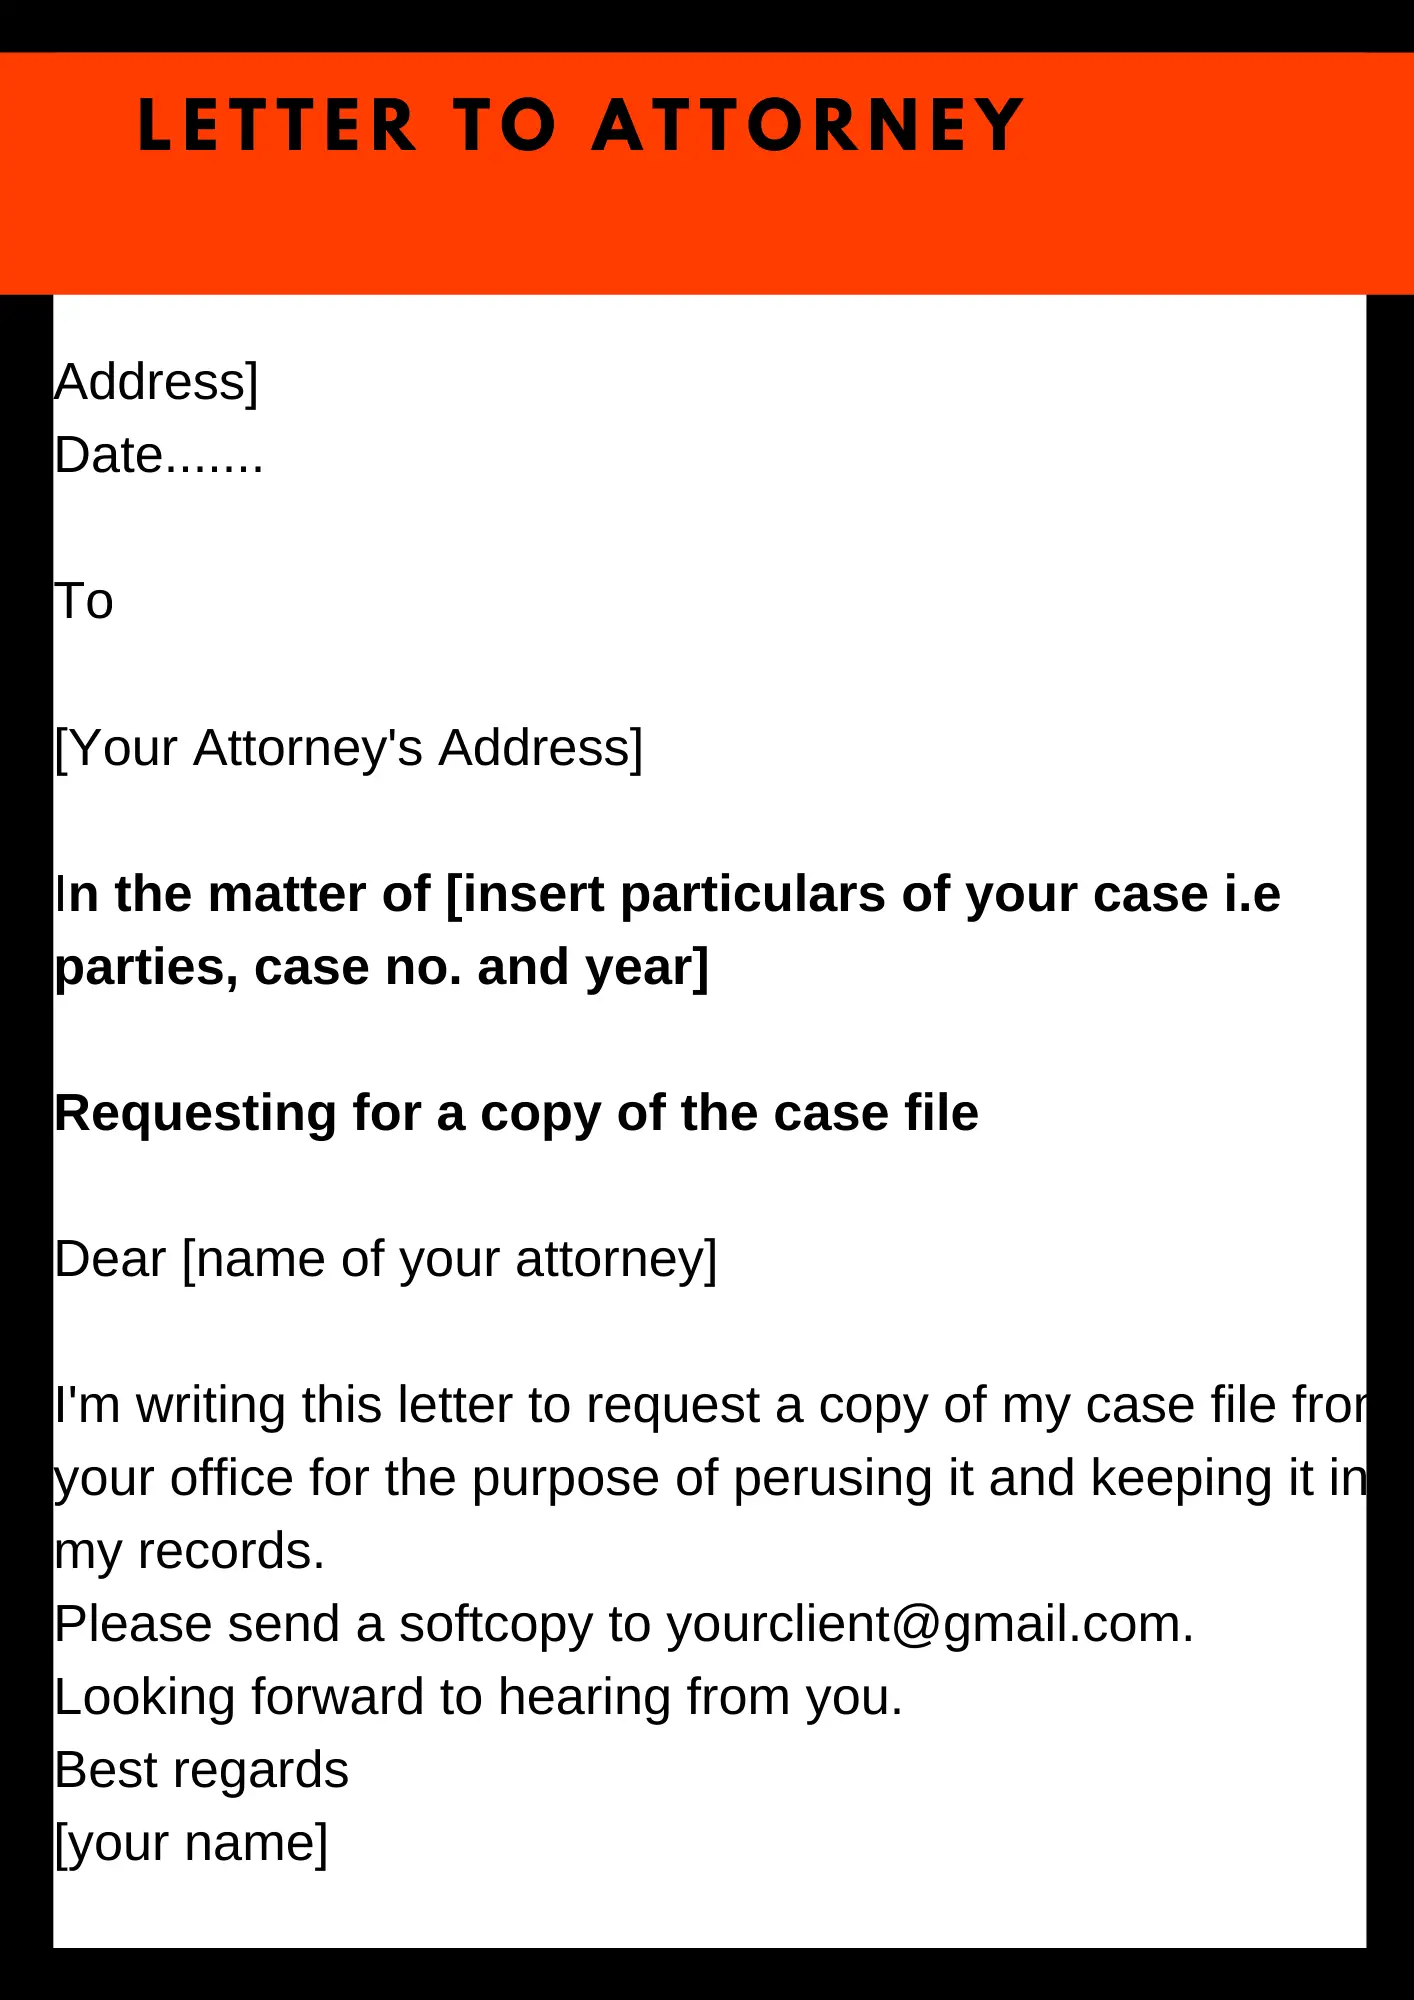 Sample letter to Attorney regarding case